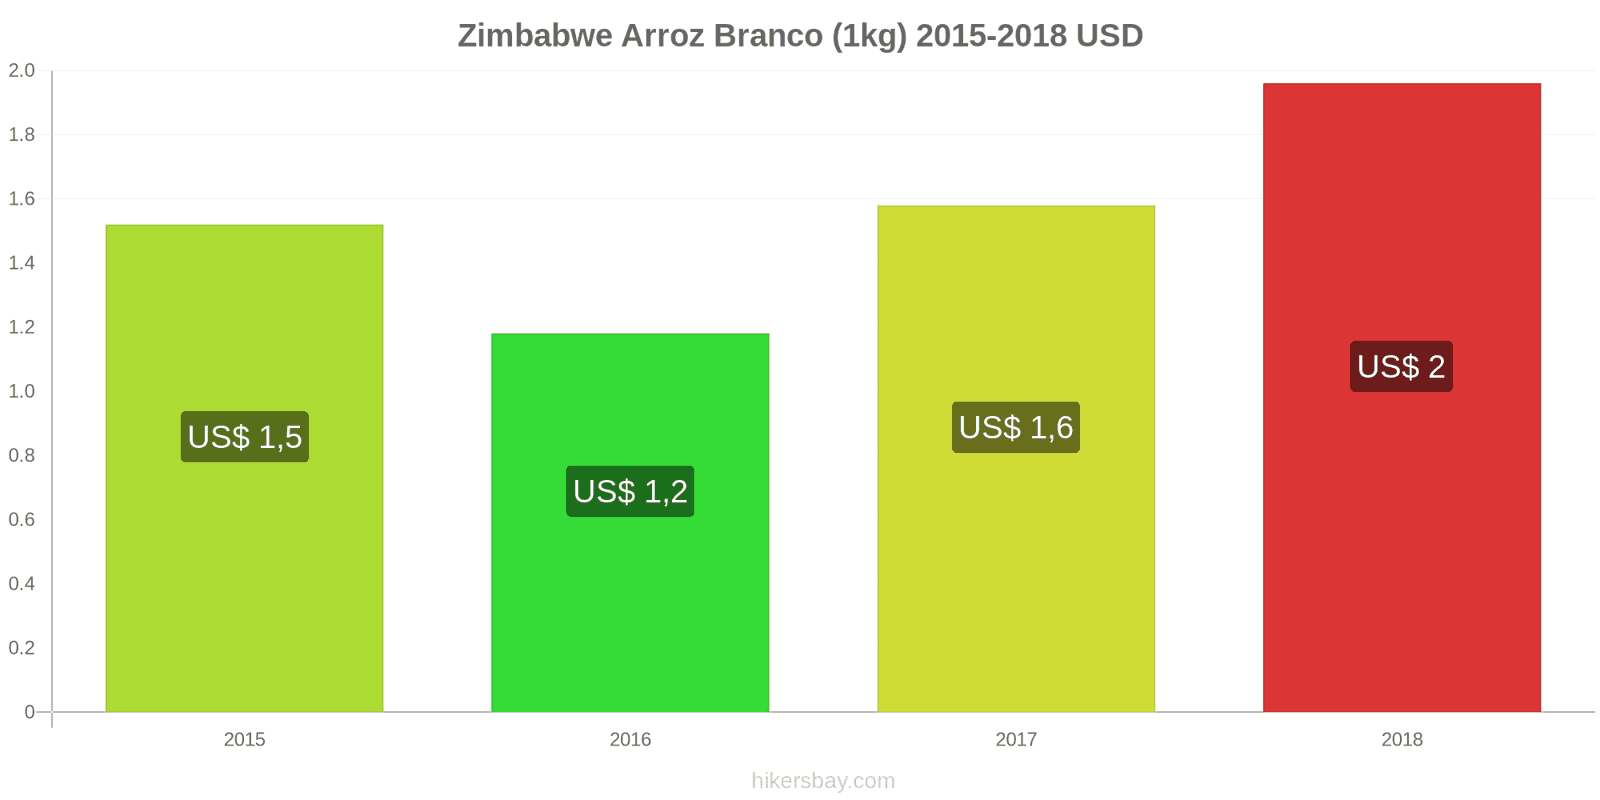 Zimbabwe mudanças de preços Quilo de arroz branco hikersbay.com